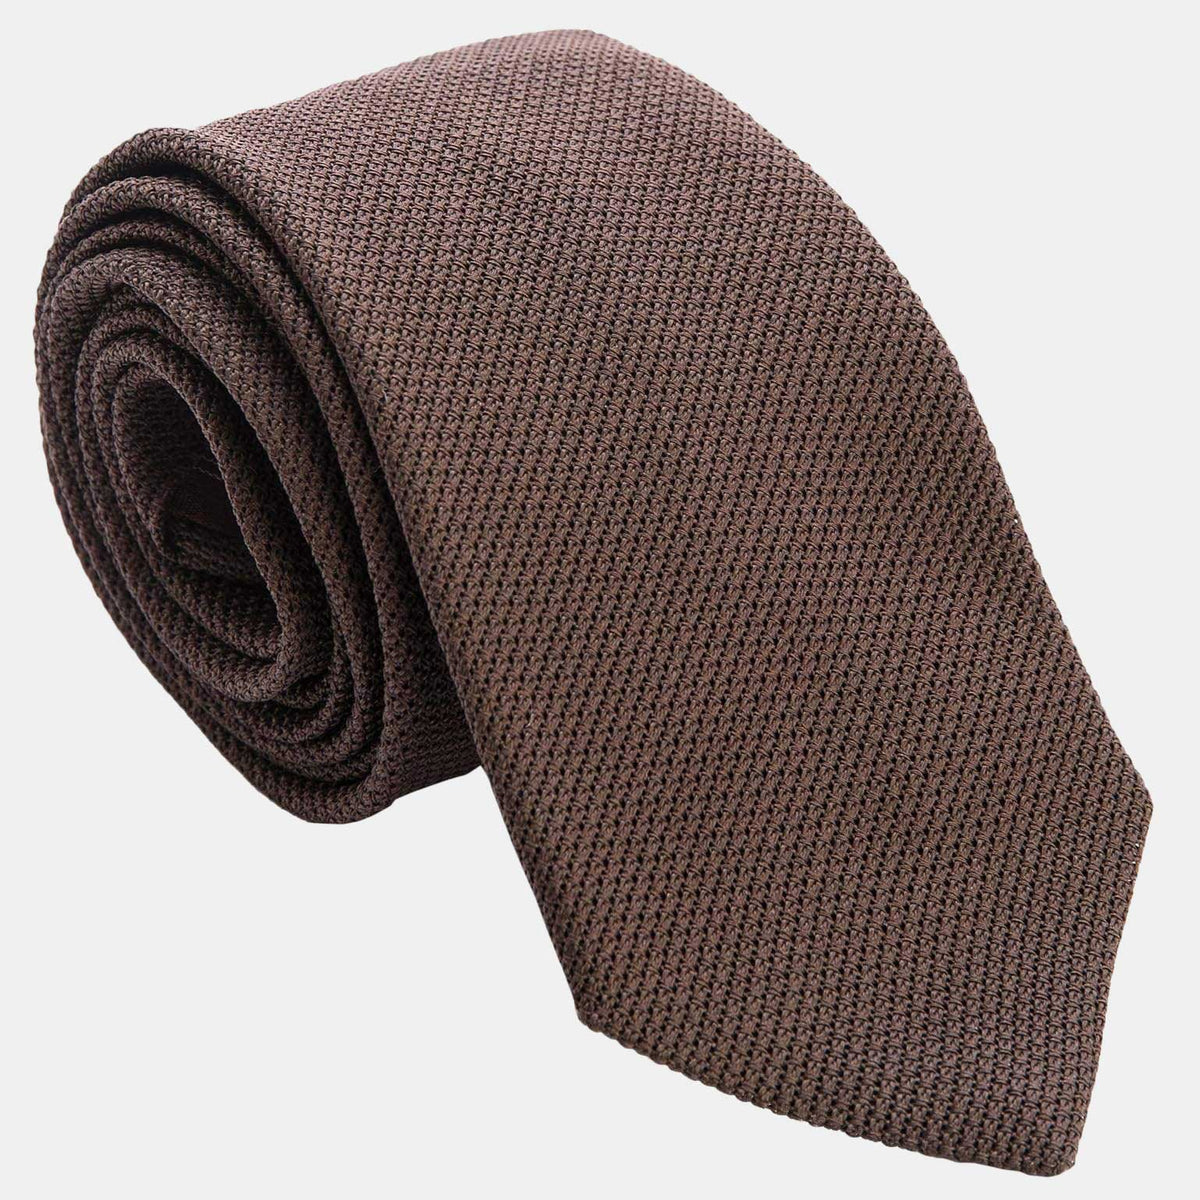 solid brown silk tie from Como Italy